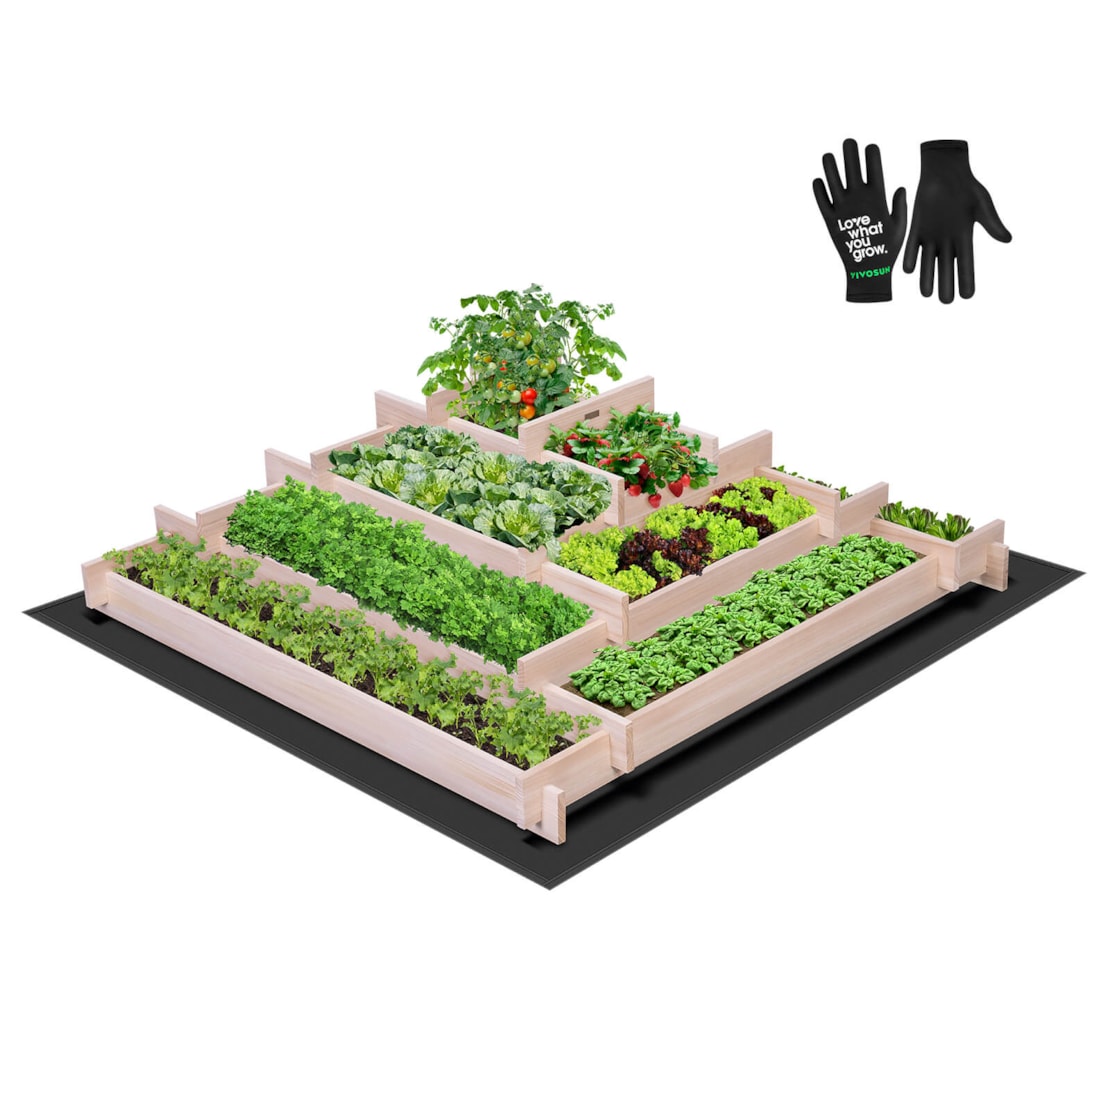 VIVOSUN 5-Tier Raised Garden Bed, 41.7 x 41.7 x 14.2 Inches Outdoor Wood Planter Box